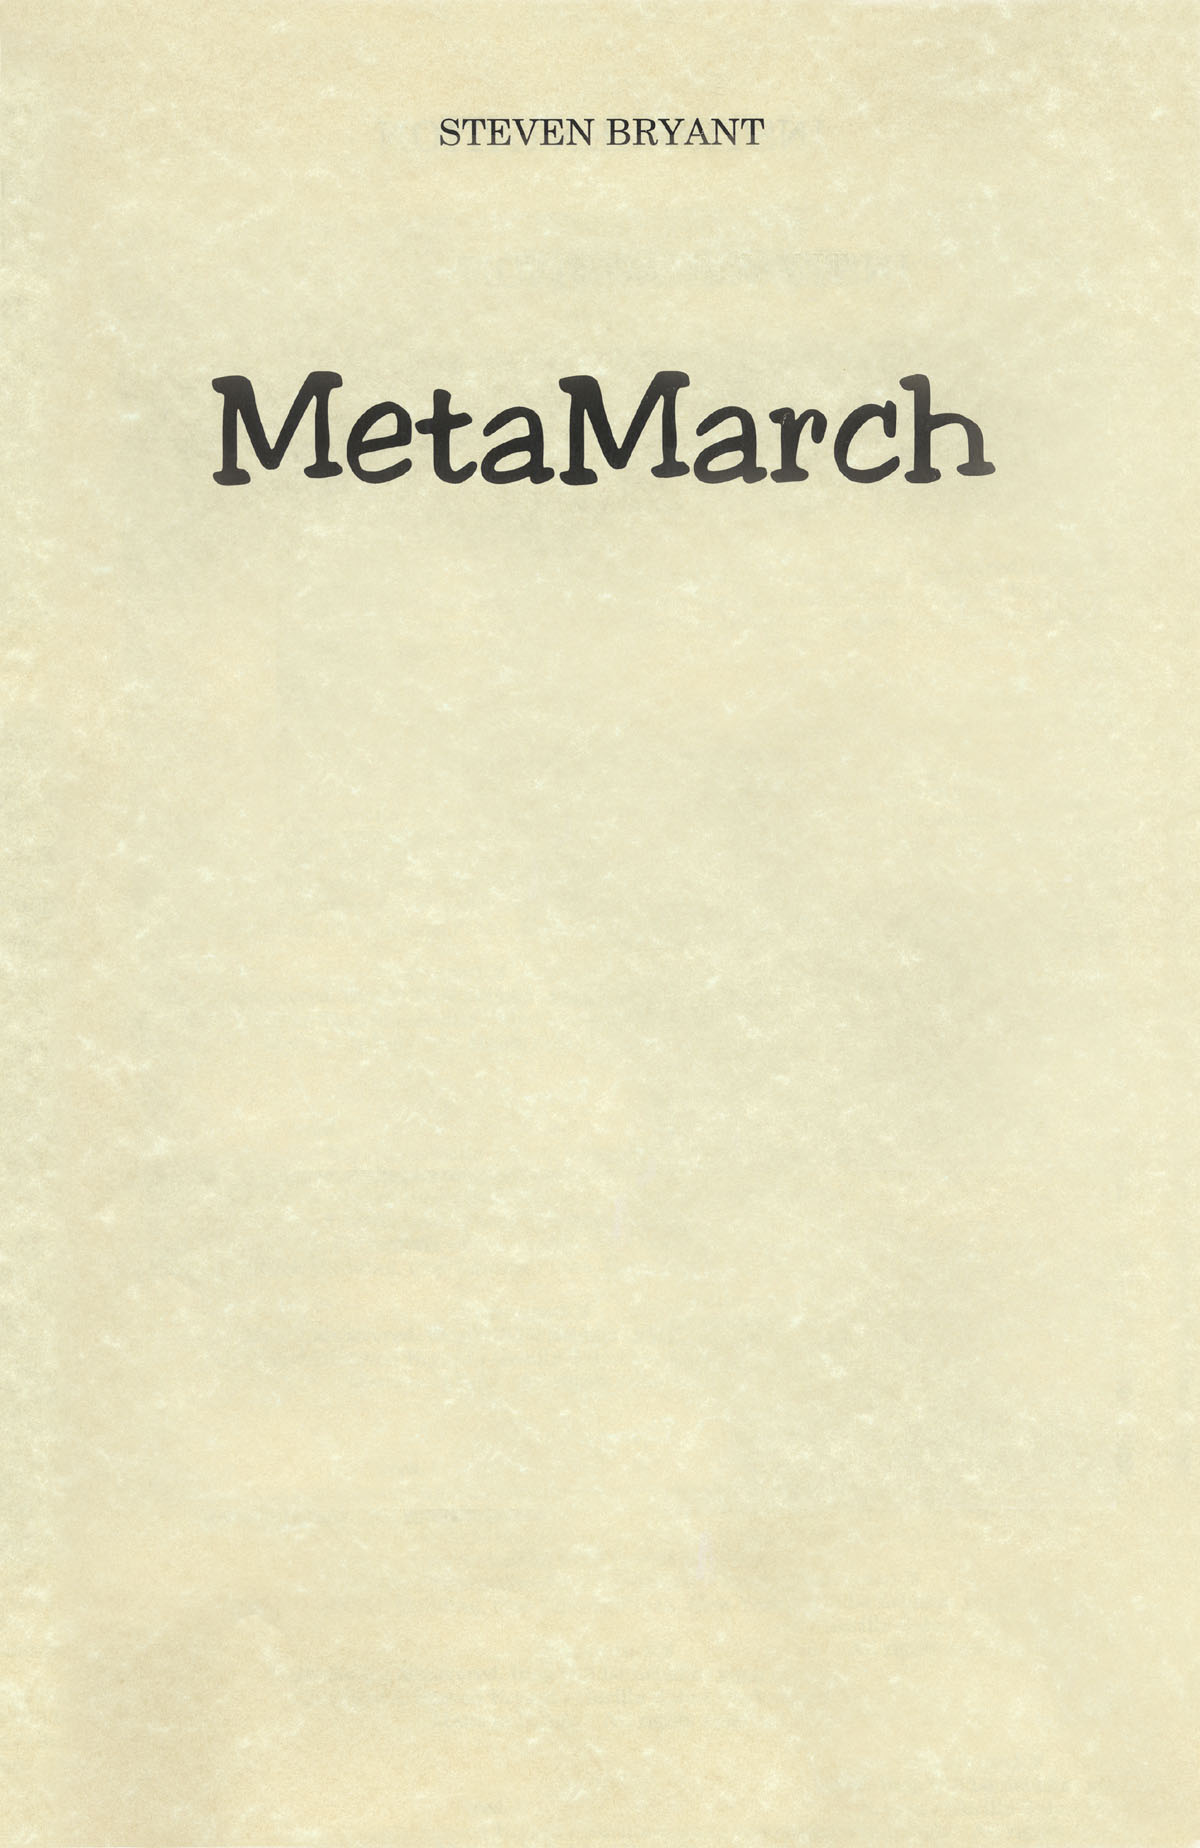 MetaMarch